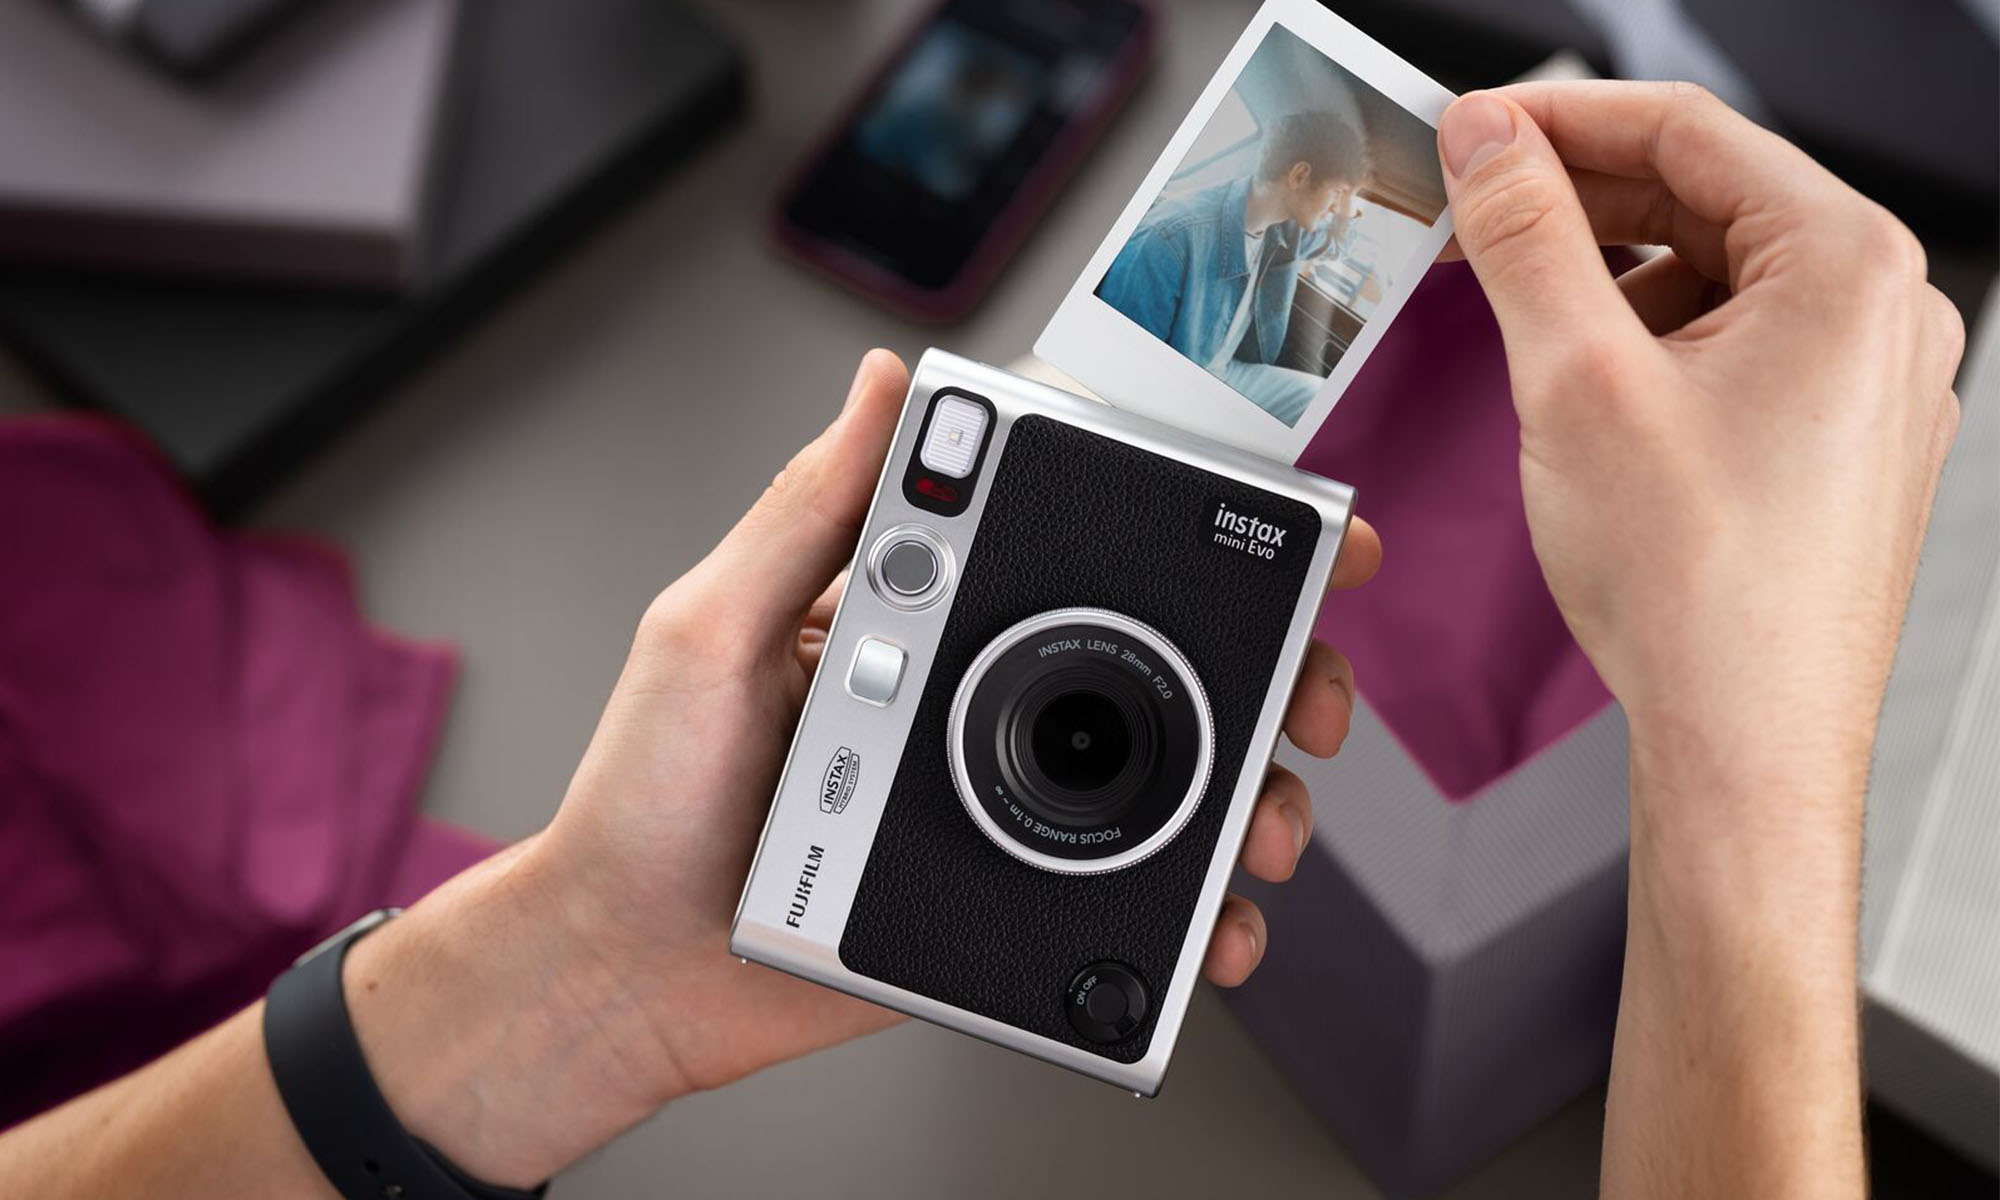 fujifilm launches its instax mini evo hybrid instant camera